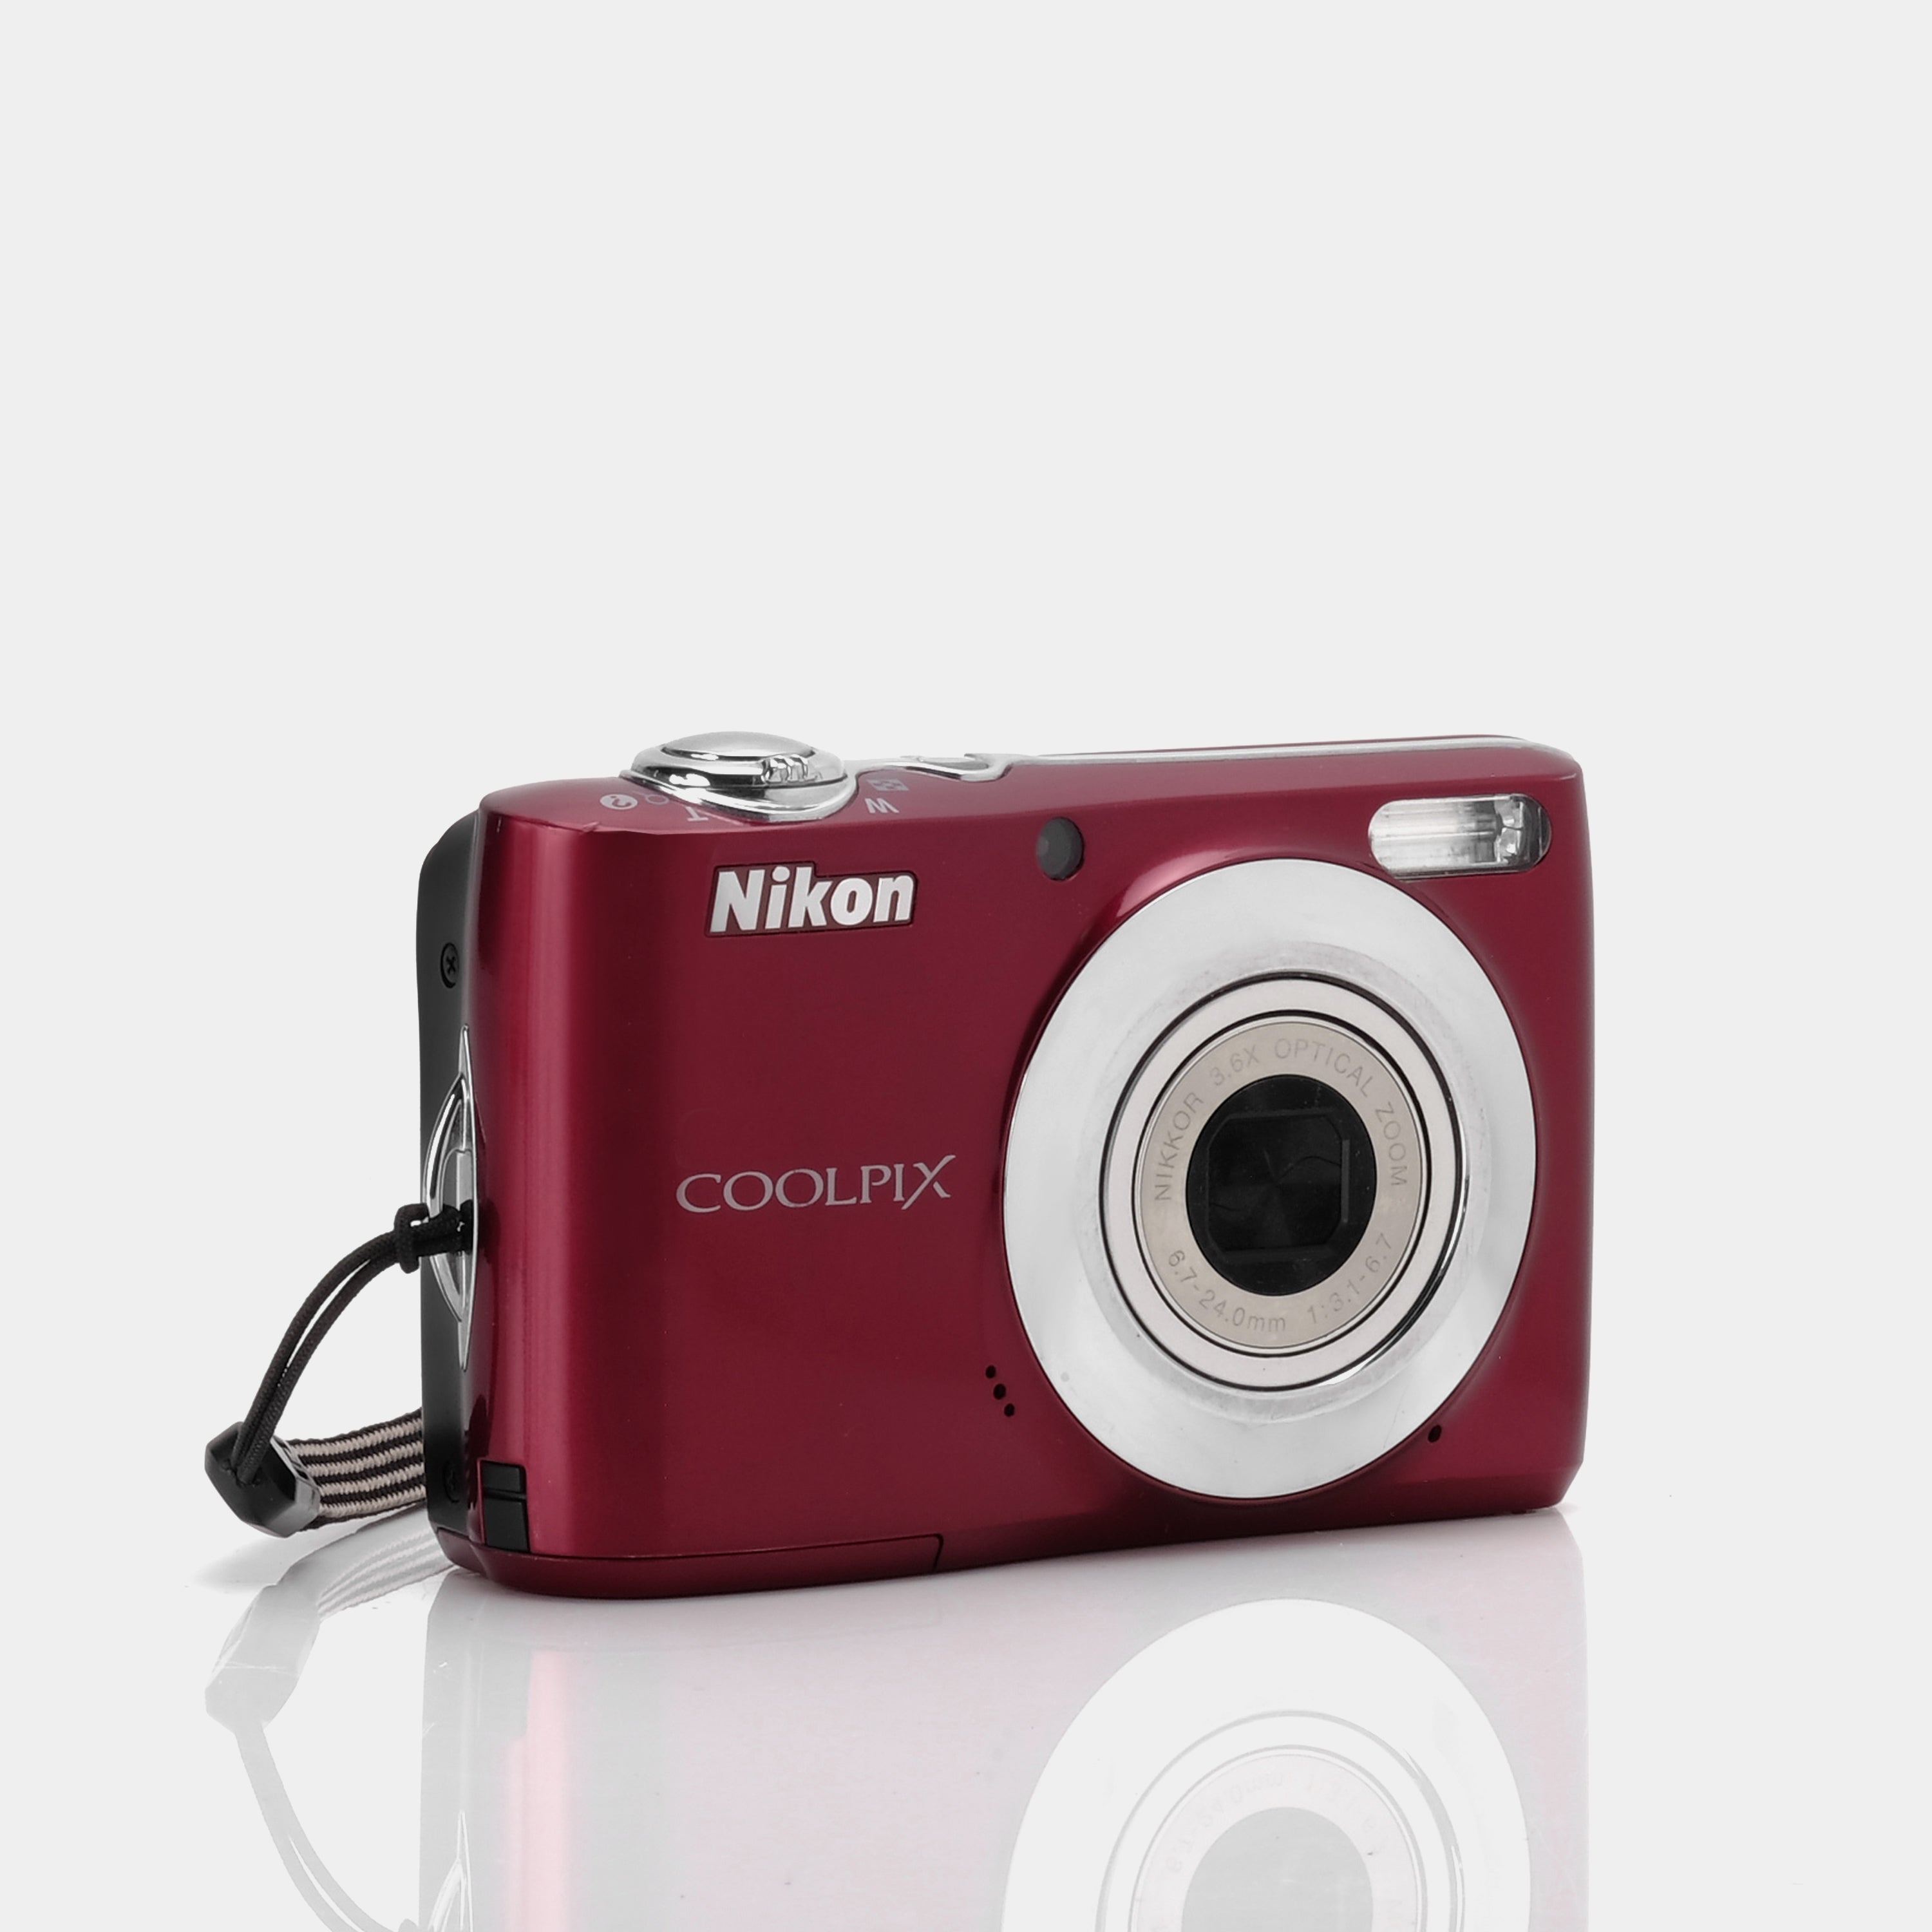 Nikon Coolpix L22 Maroon Point and Shoot Digital Camera